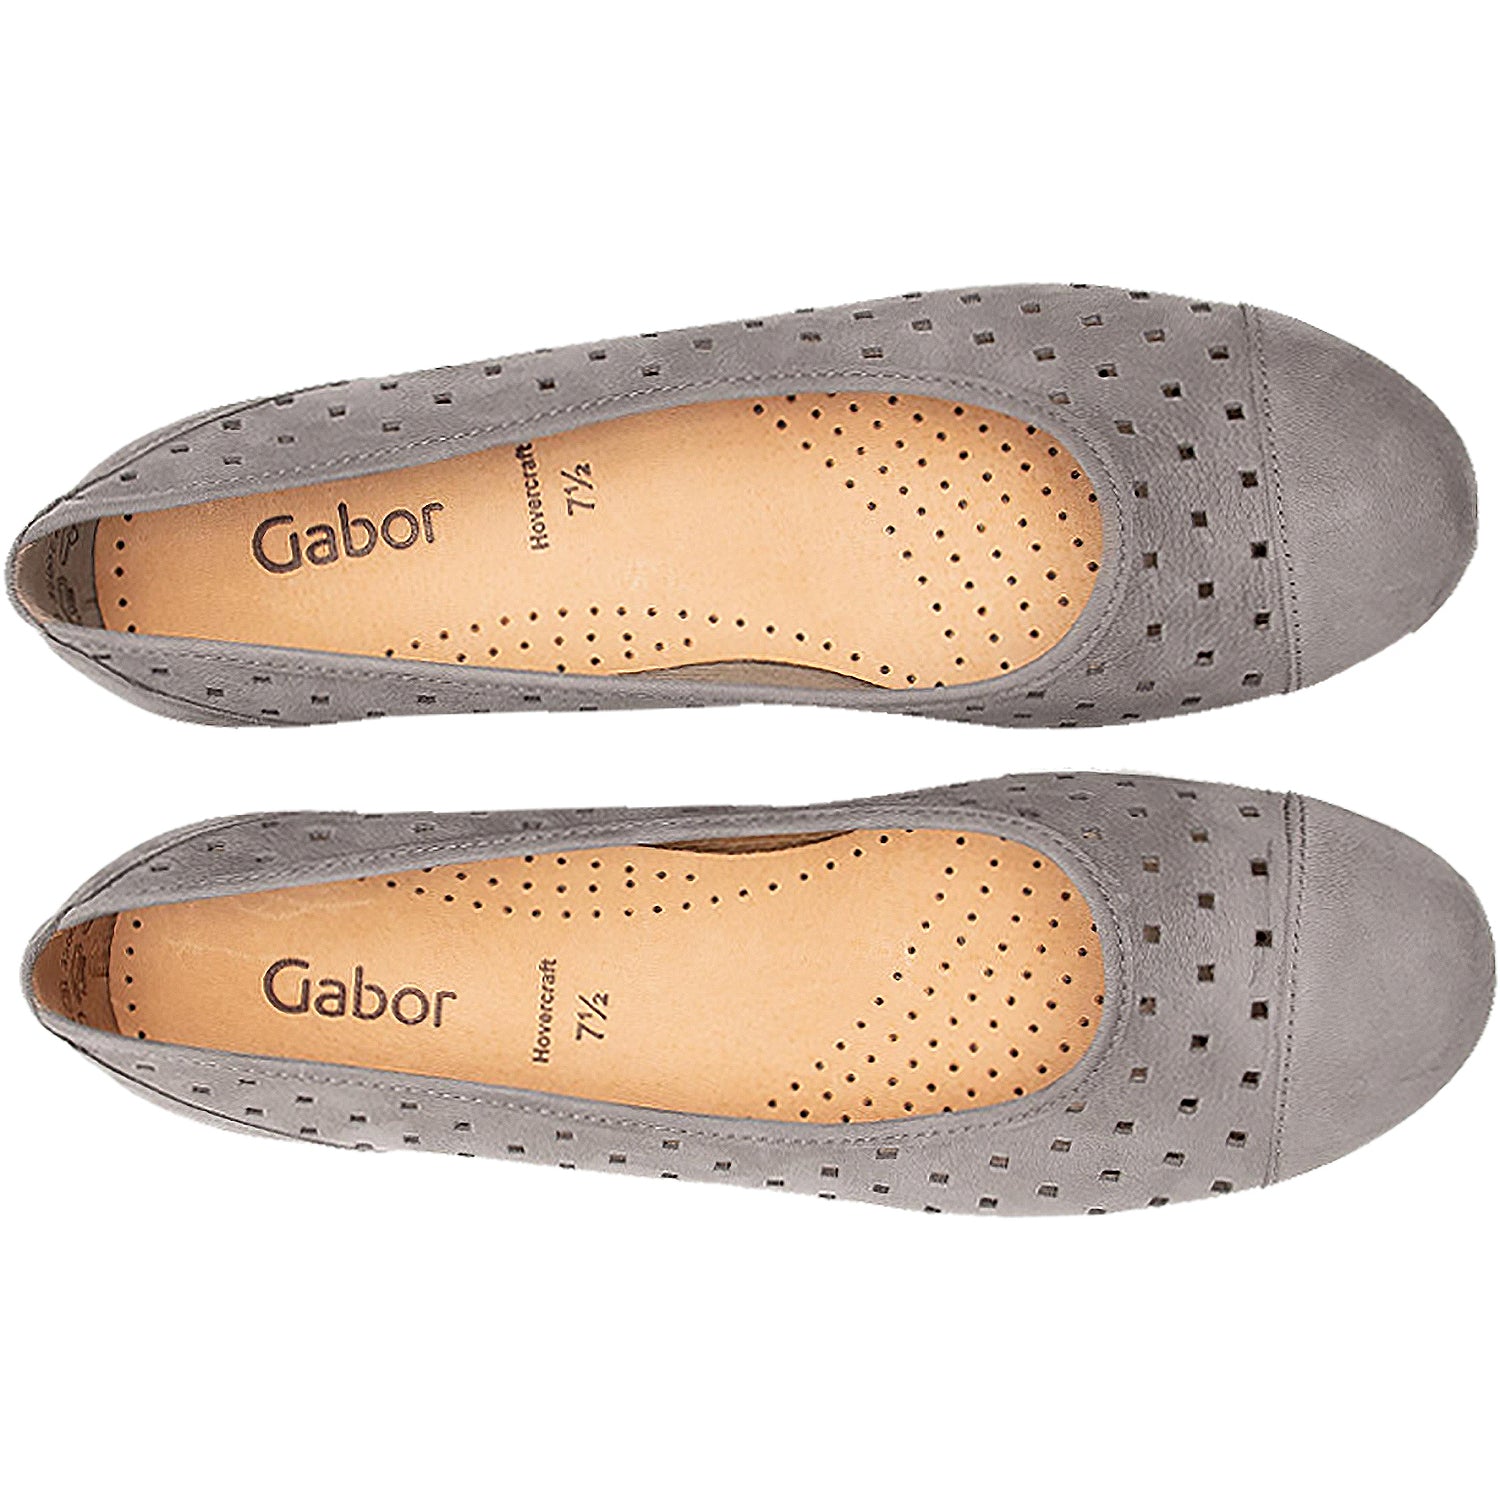 Gabor Wallaby Women's Ballet Flats | Footwear etc.